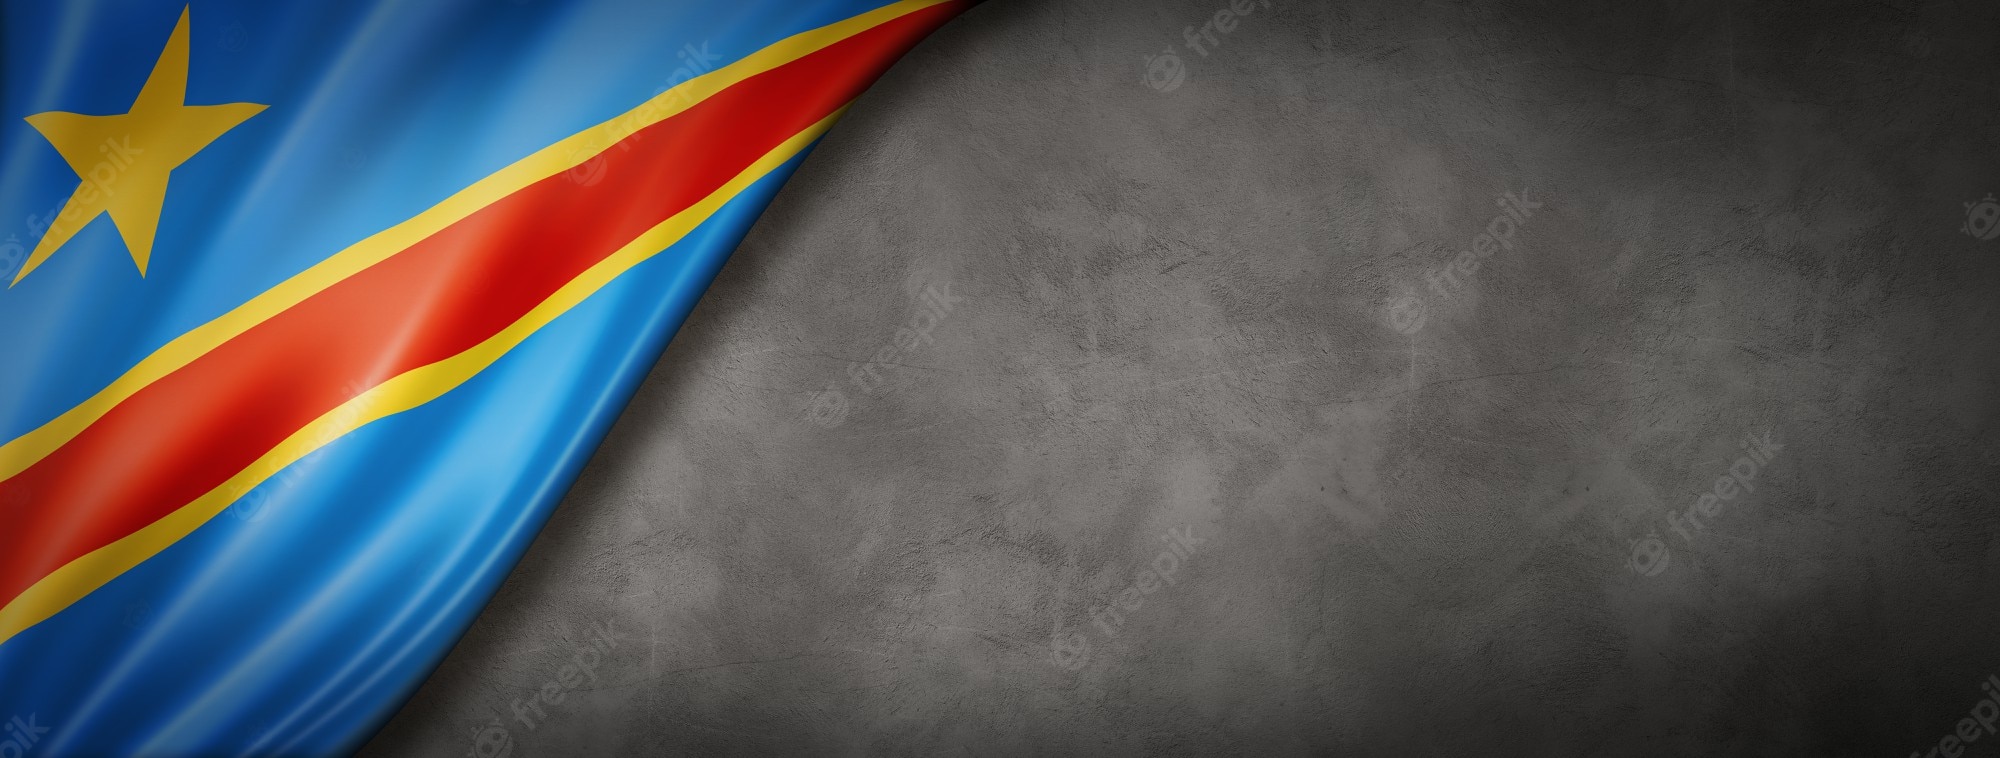 Democratic Republic Of The Congo Flag Wallpapers